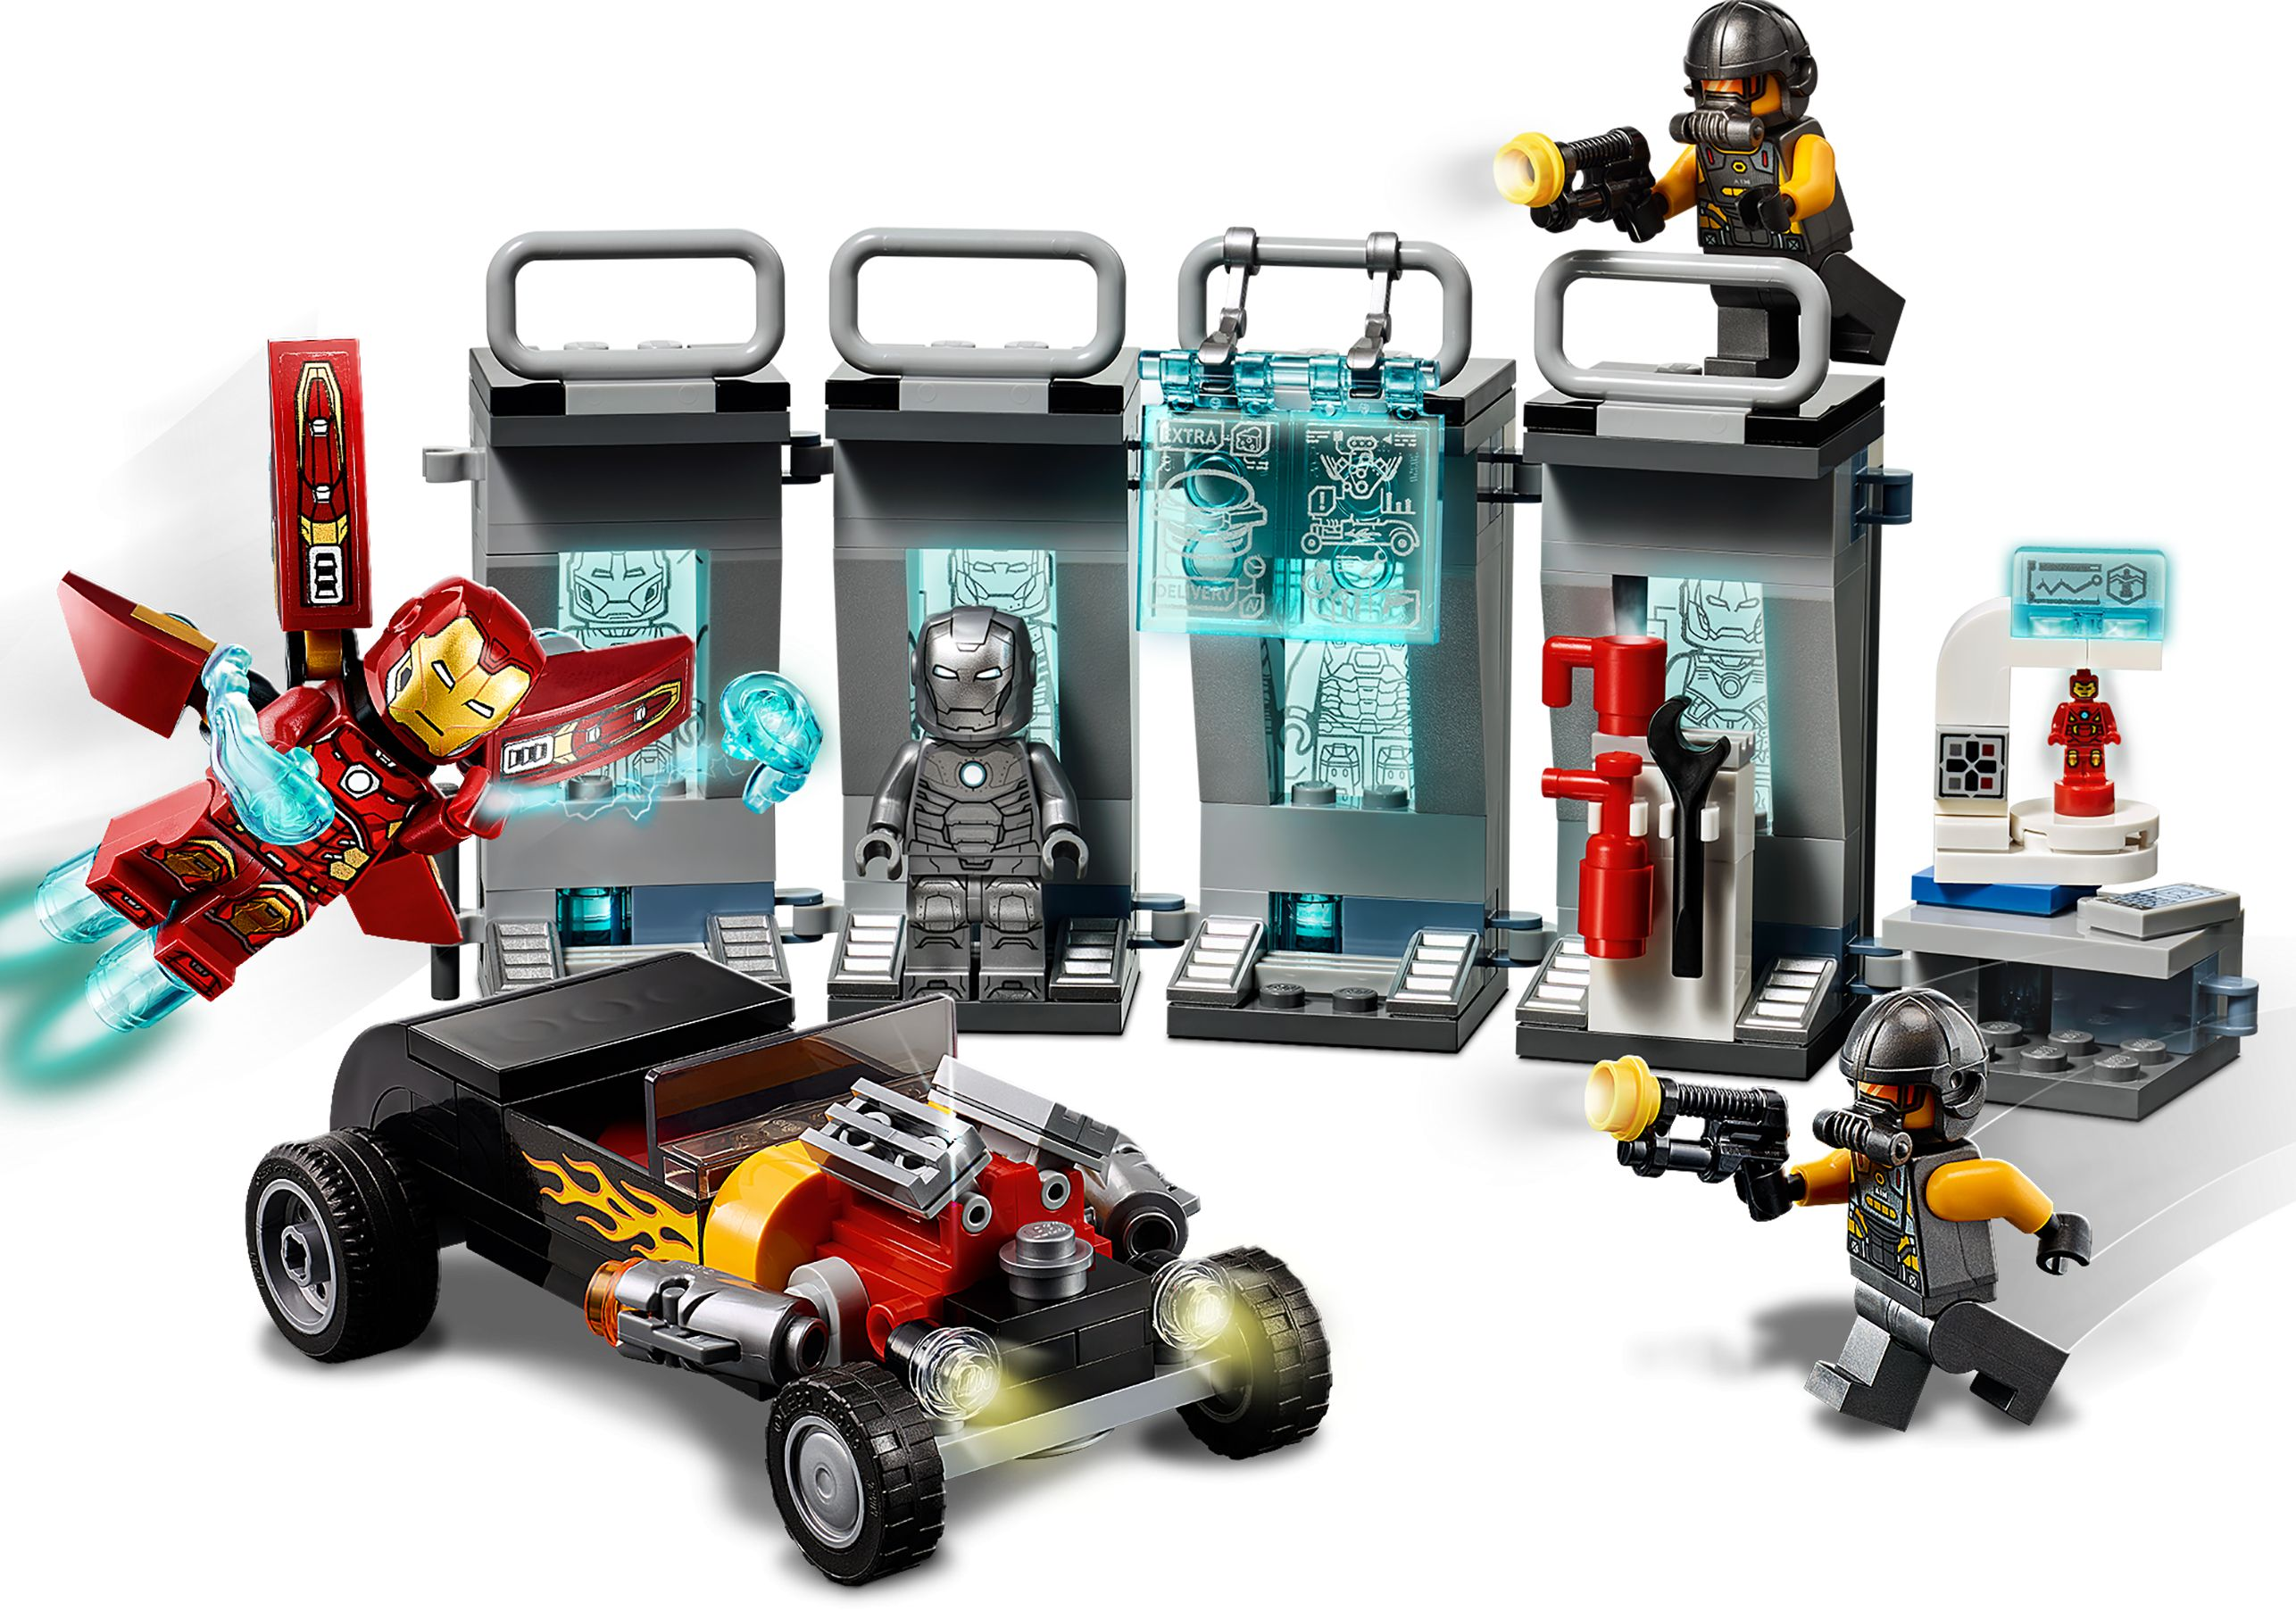 LEGO 76167 Iron Arsenal Mans Bausatz Tony Stark Avengers